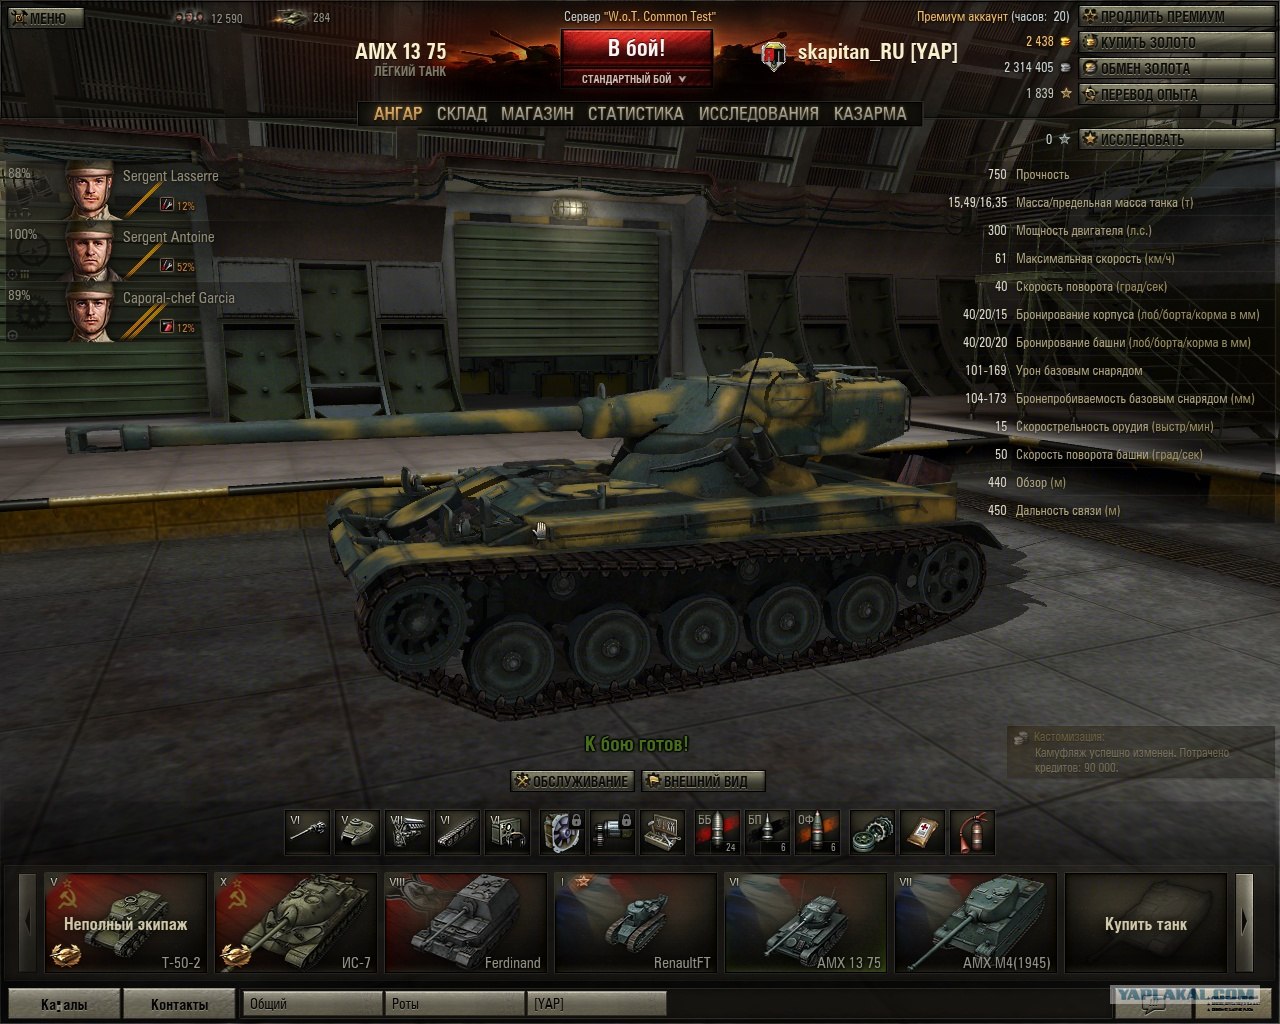 AMX скорострельность. Sherman sa50. 75mm sa50. Т-50 скорость поворота башни. Купить танк 300 с пробегом